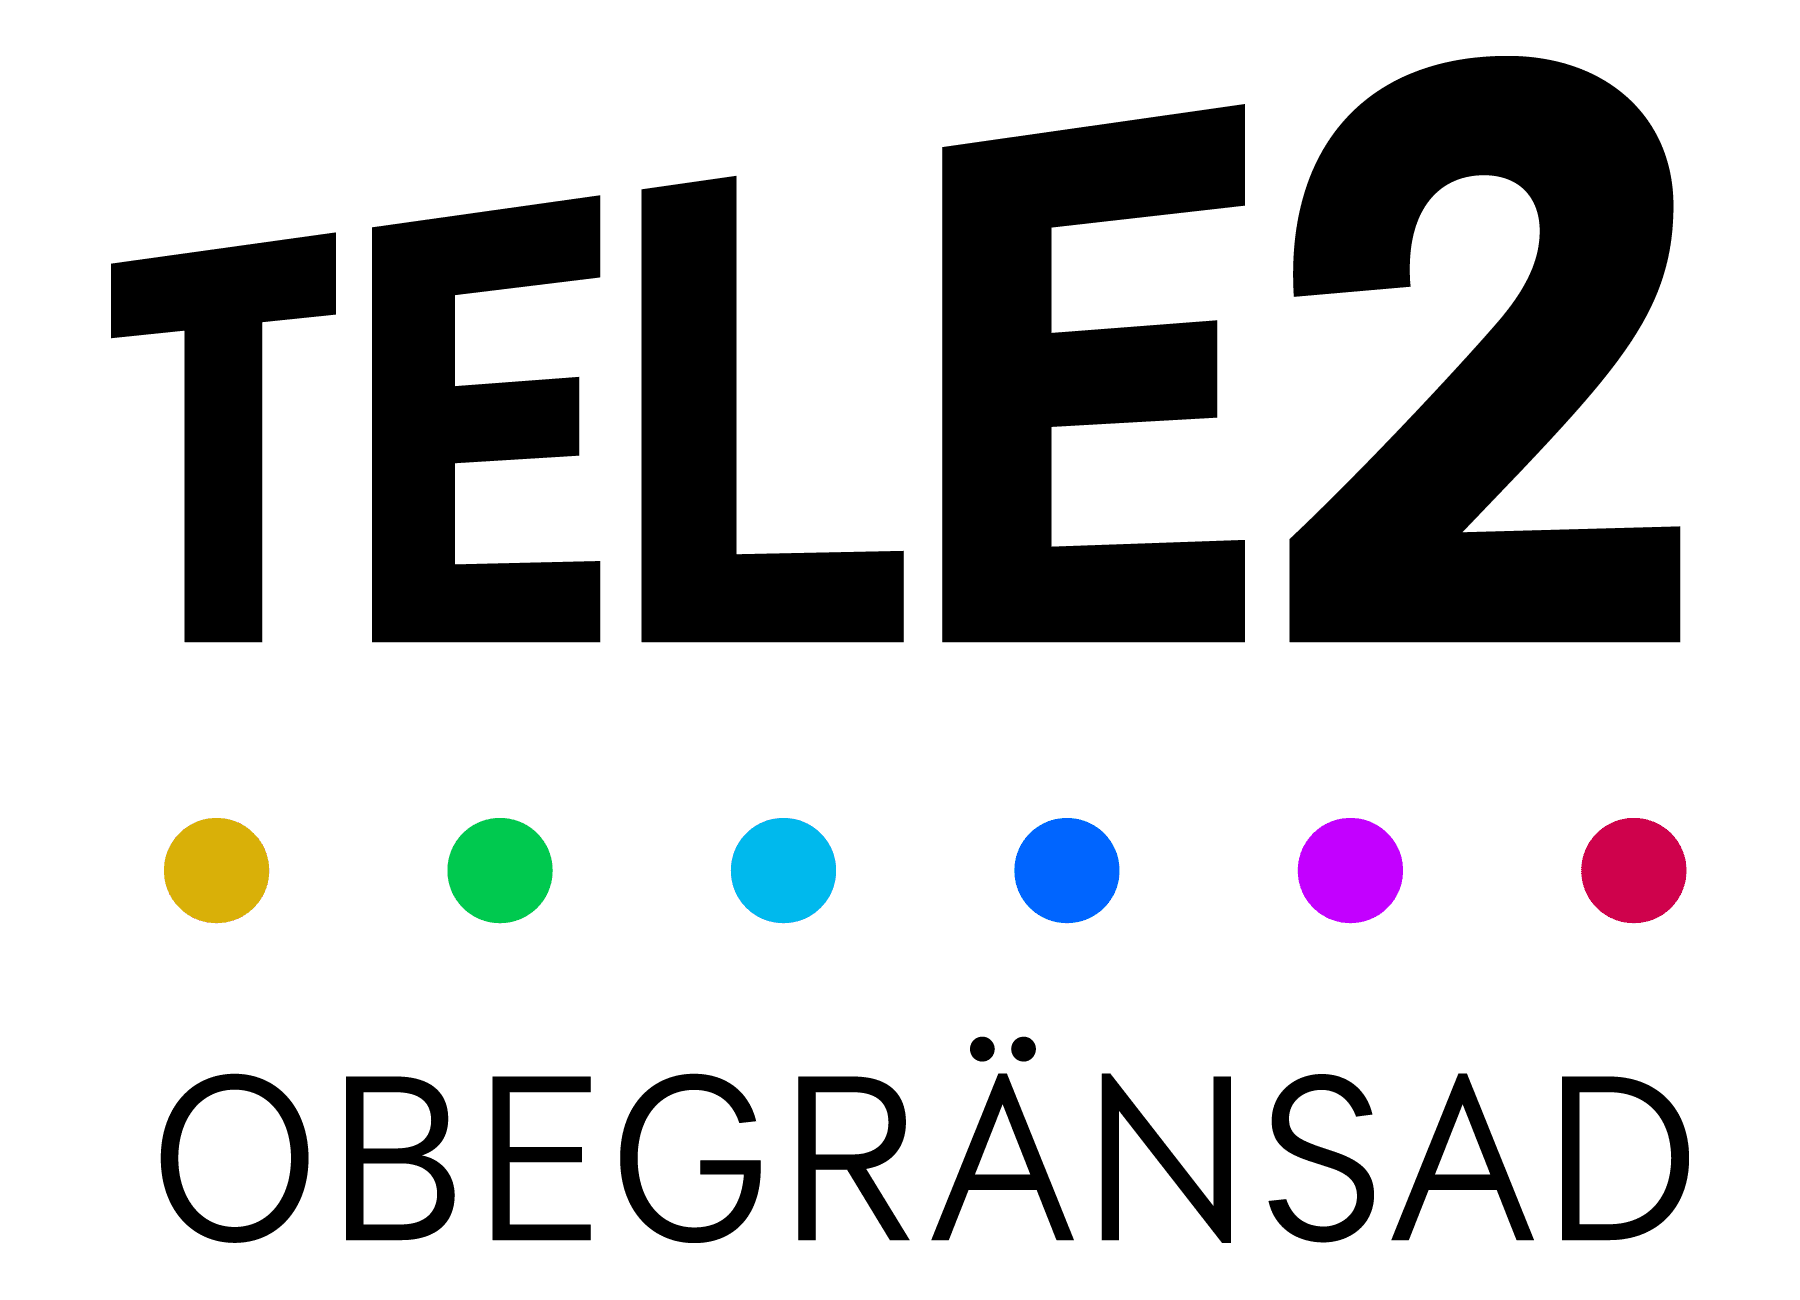 Tele2_Obegransad_logo